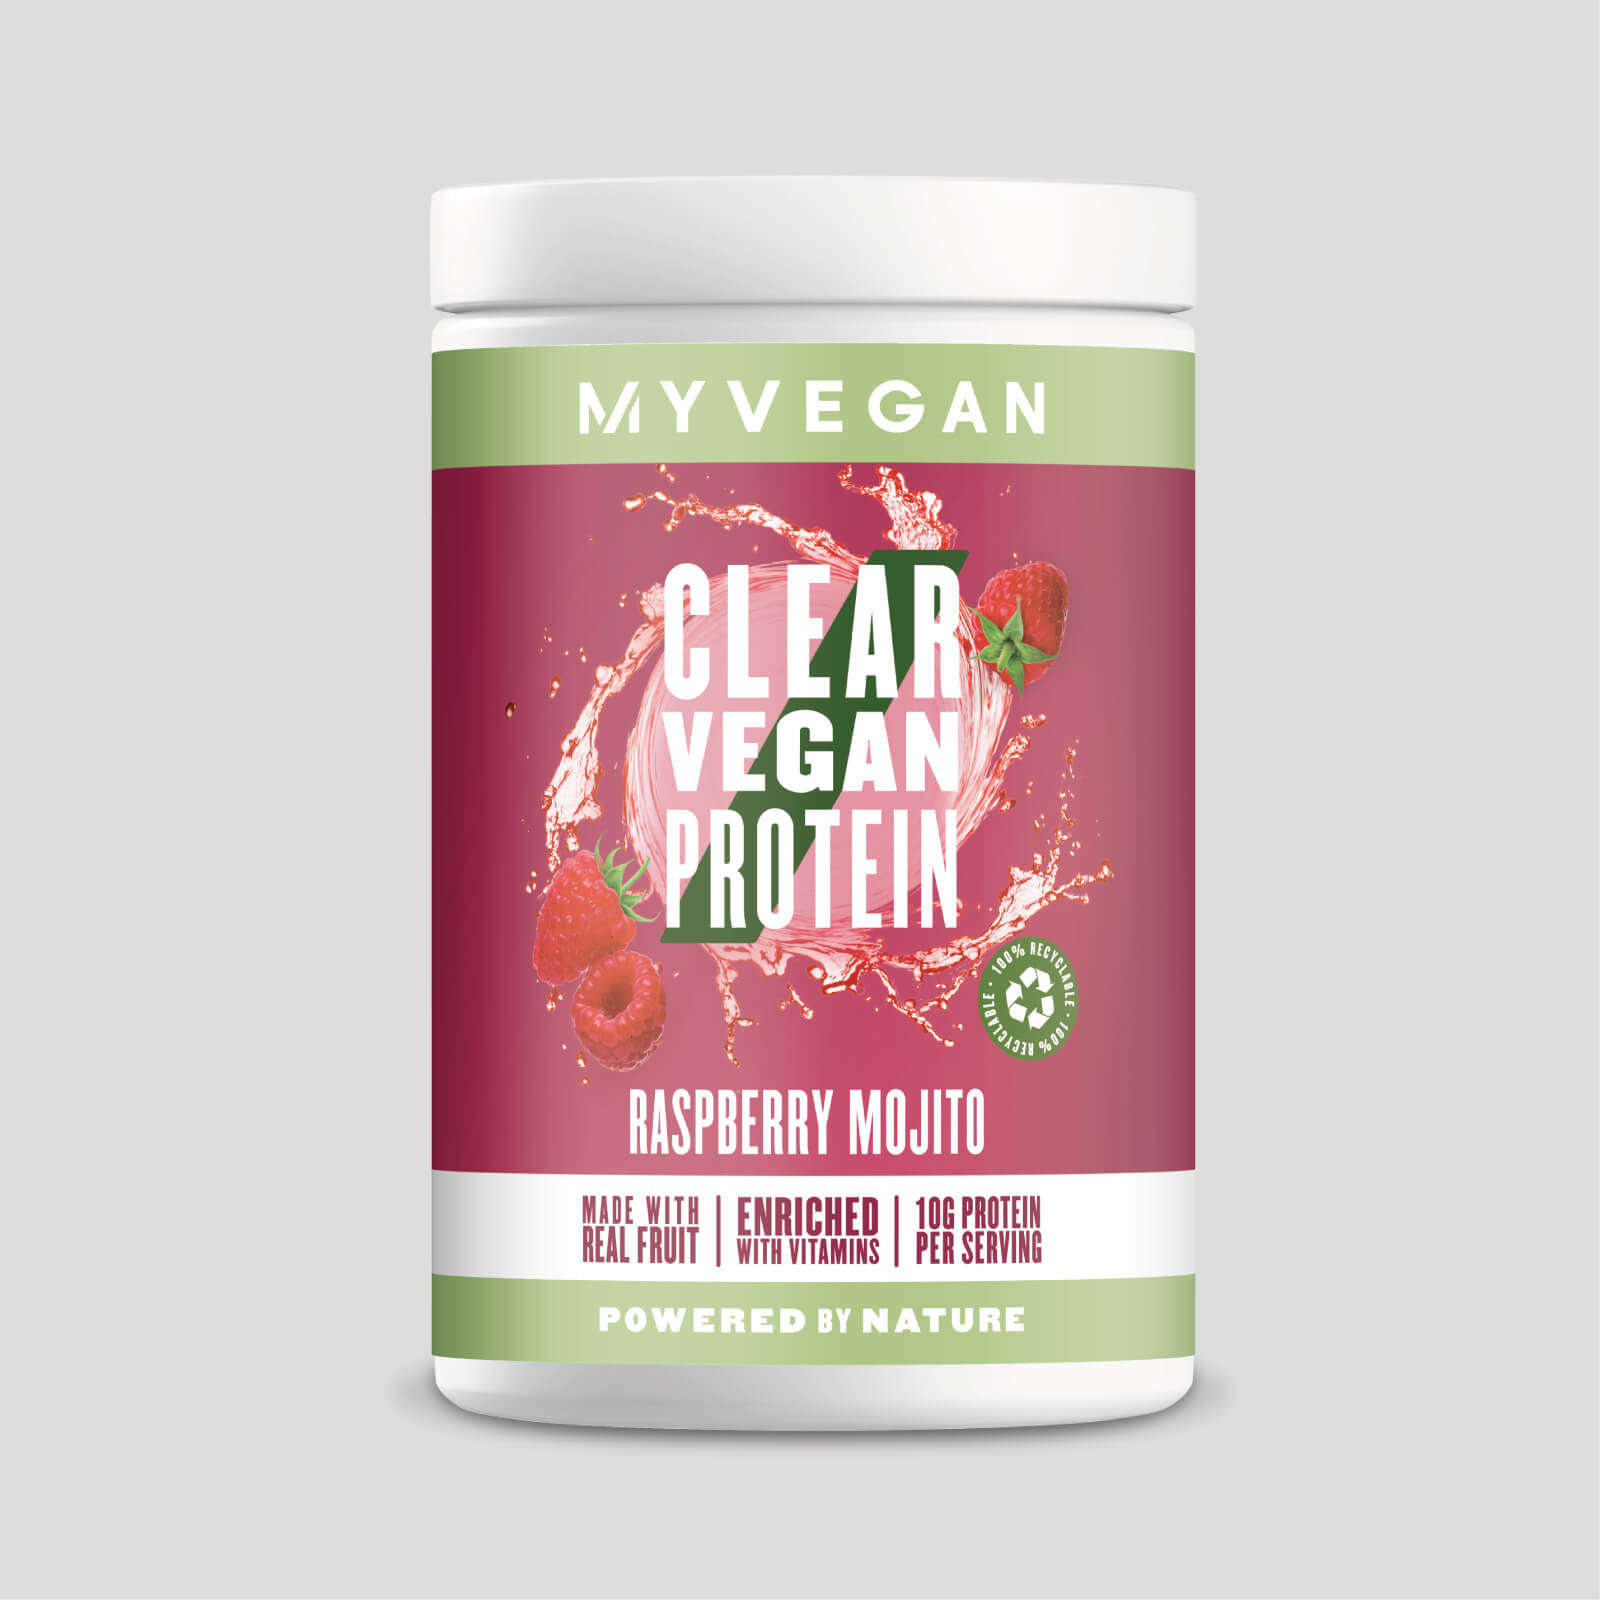 Myvegan Clear Vegan Protein - 20servings - Raspberry Mojito